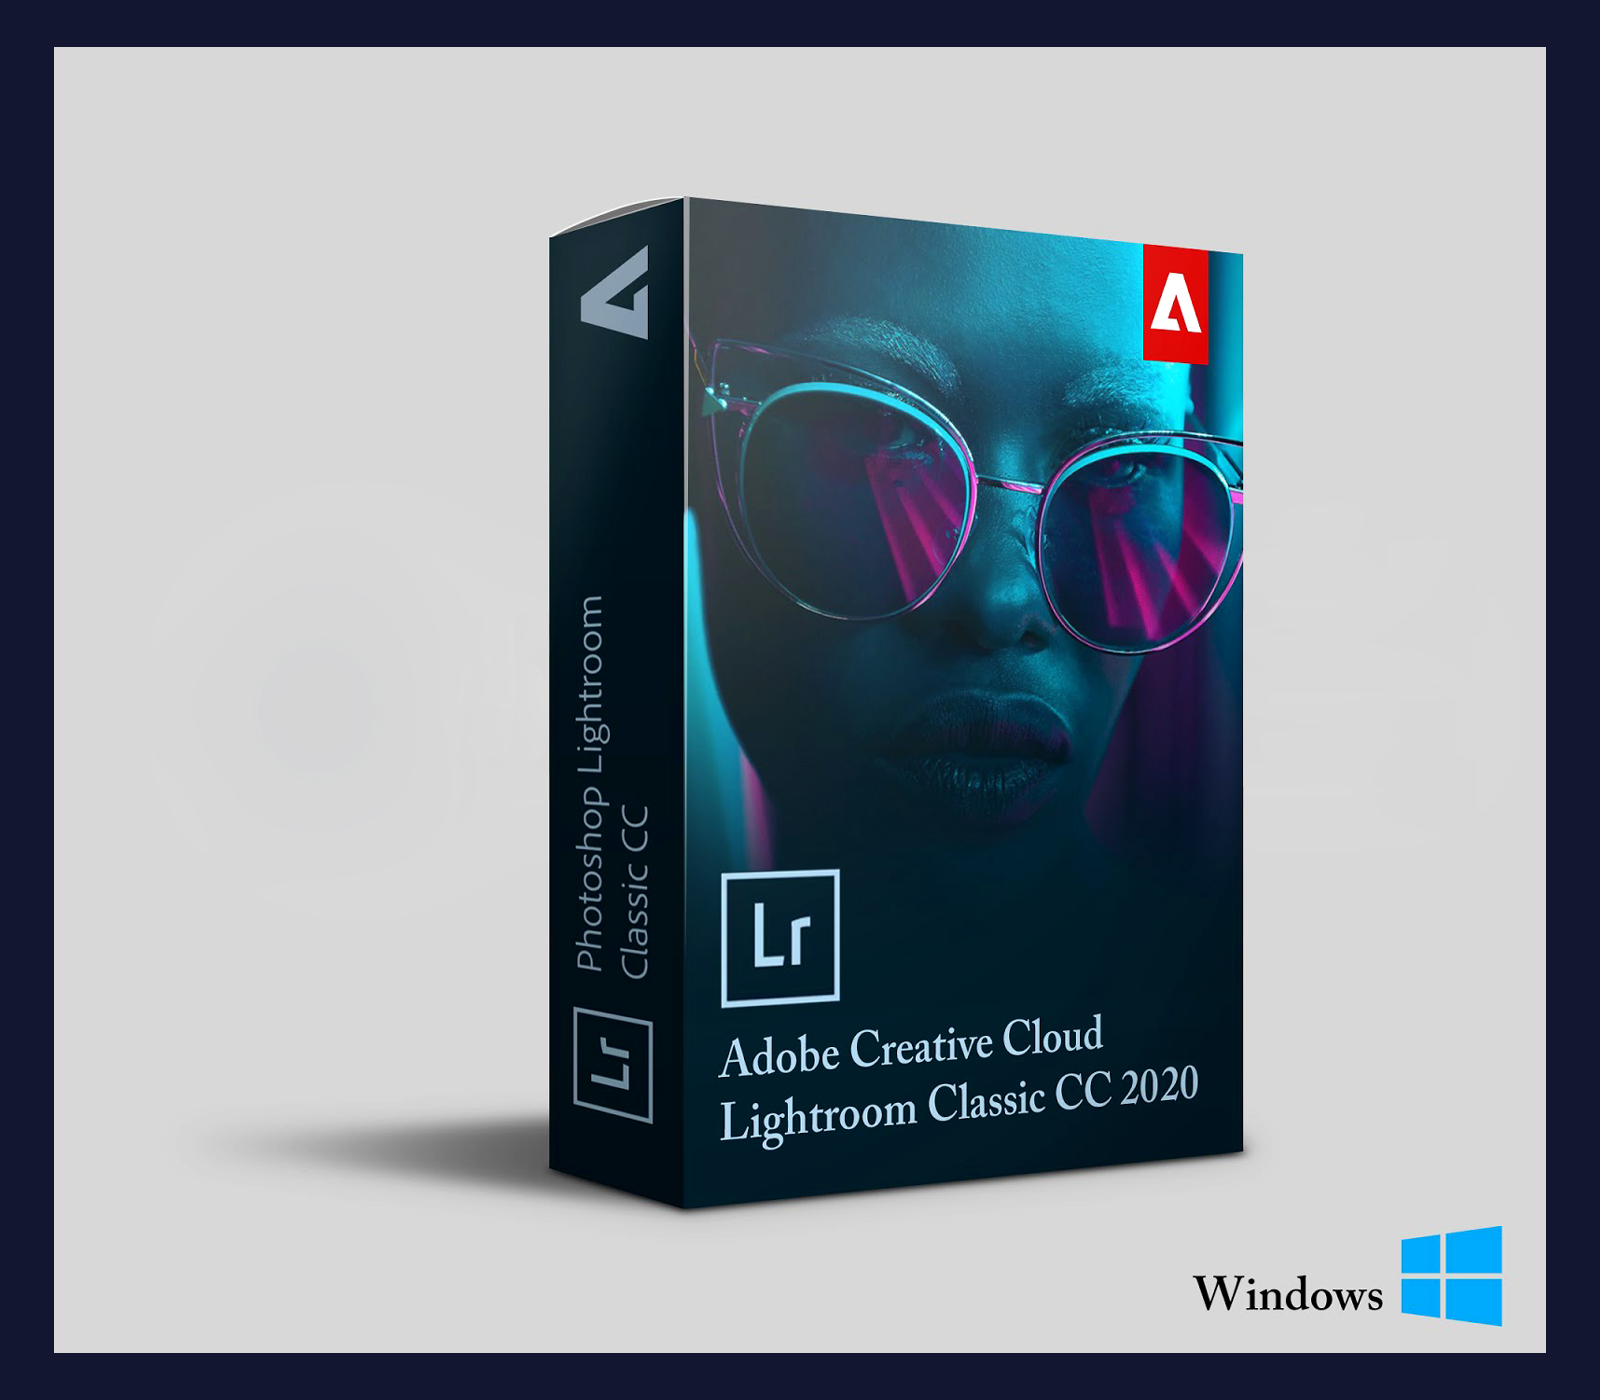 Adobe lightroom free download full version for windows 8.1 2018 free windows 7 32 bit home premium only download